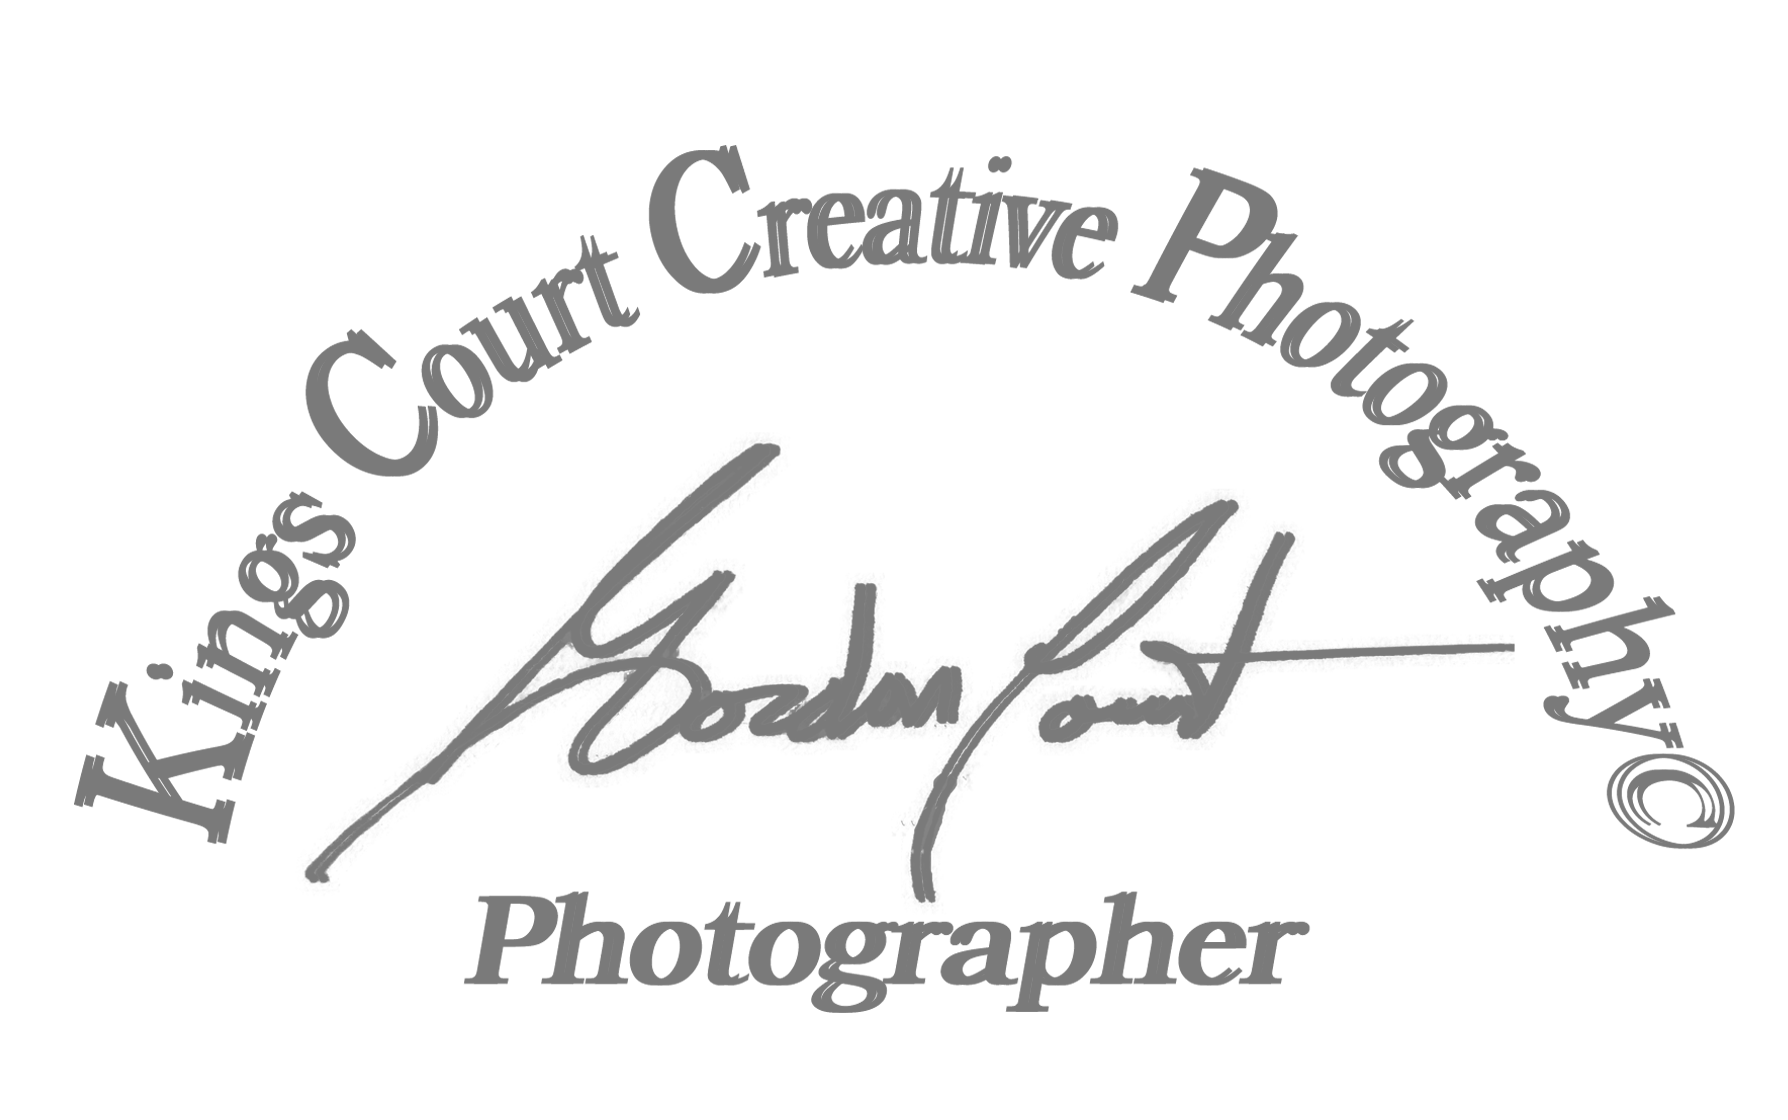 Kings Court Creative Photography